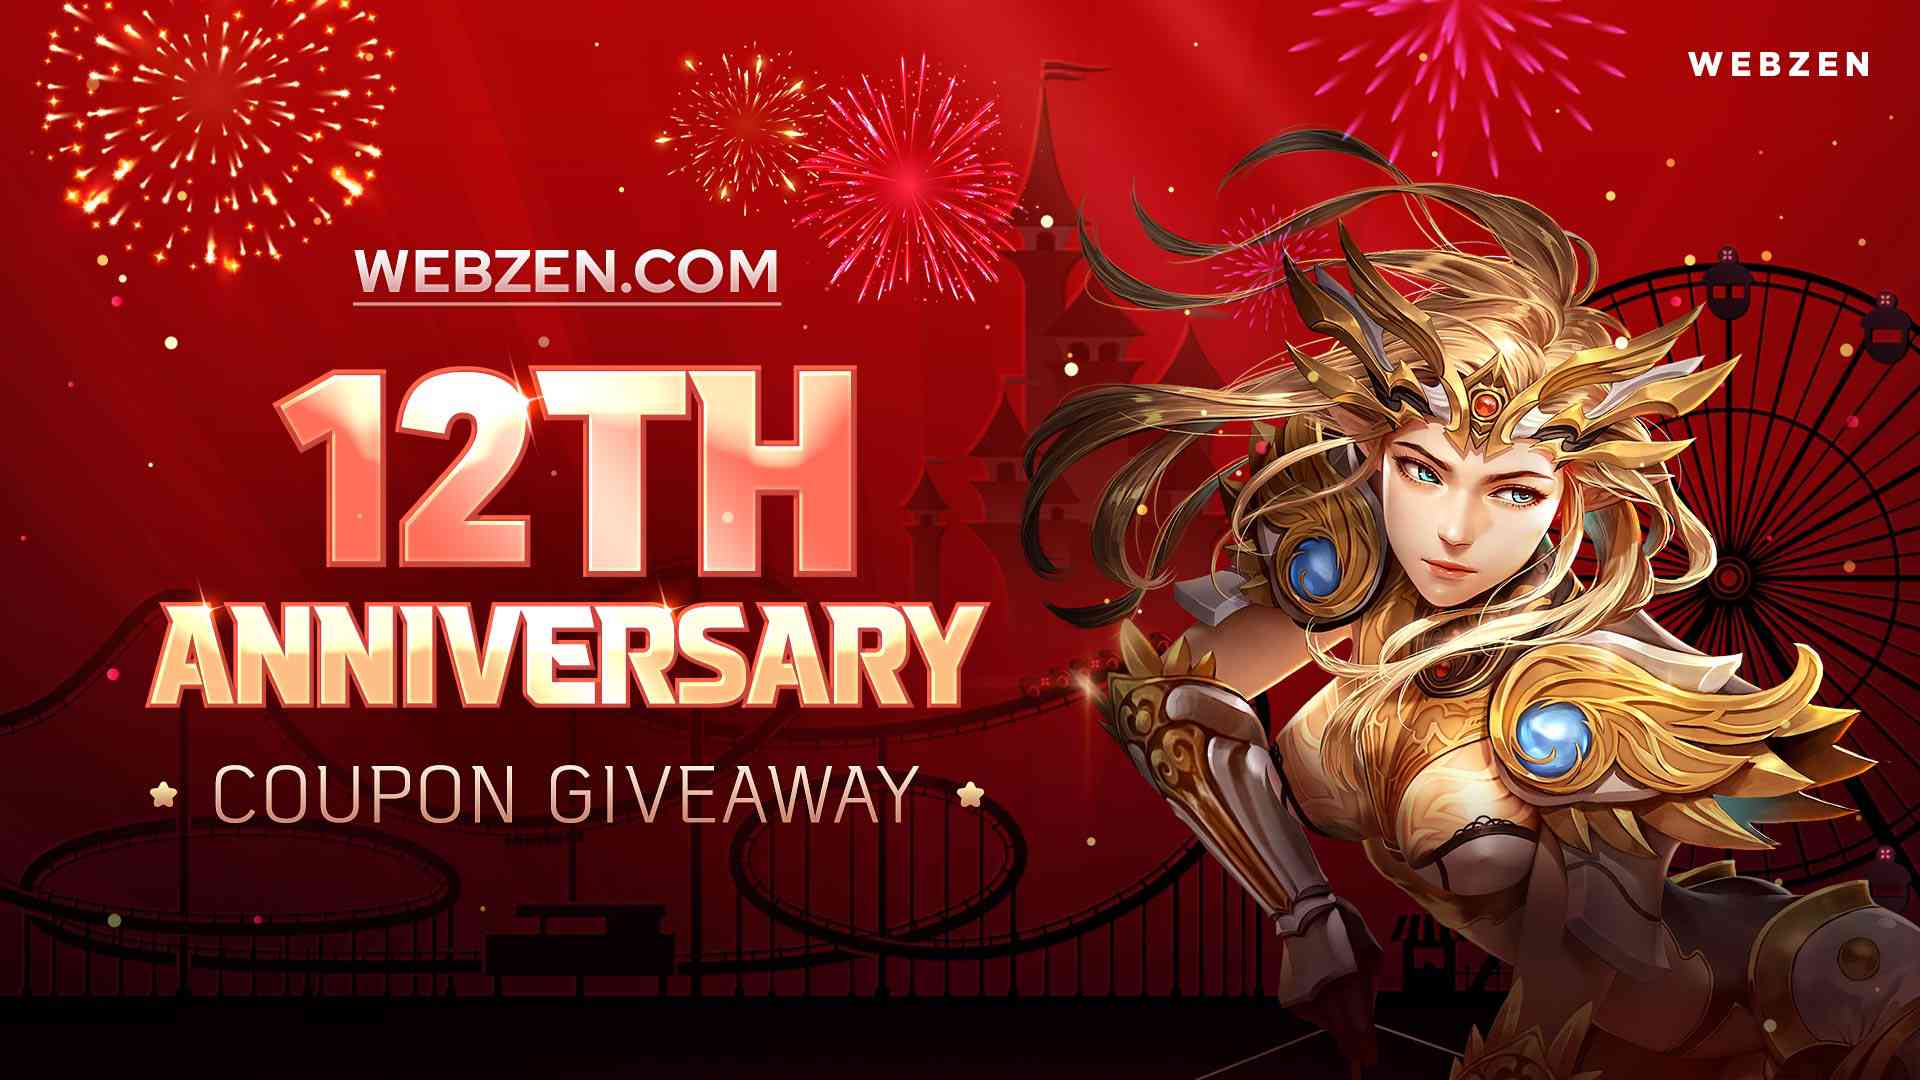 WEBZEN.COM’s 12th Anniversary Giveaway 14